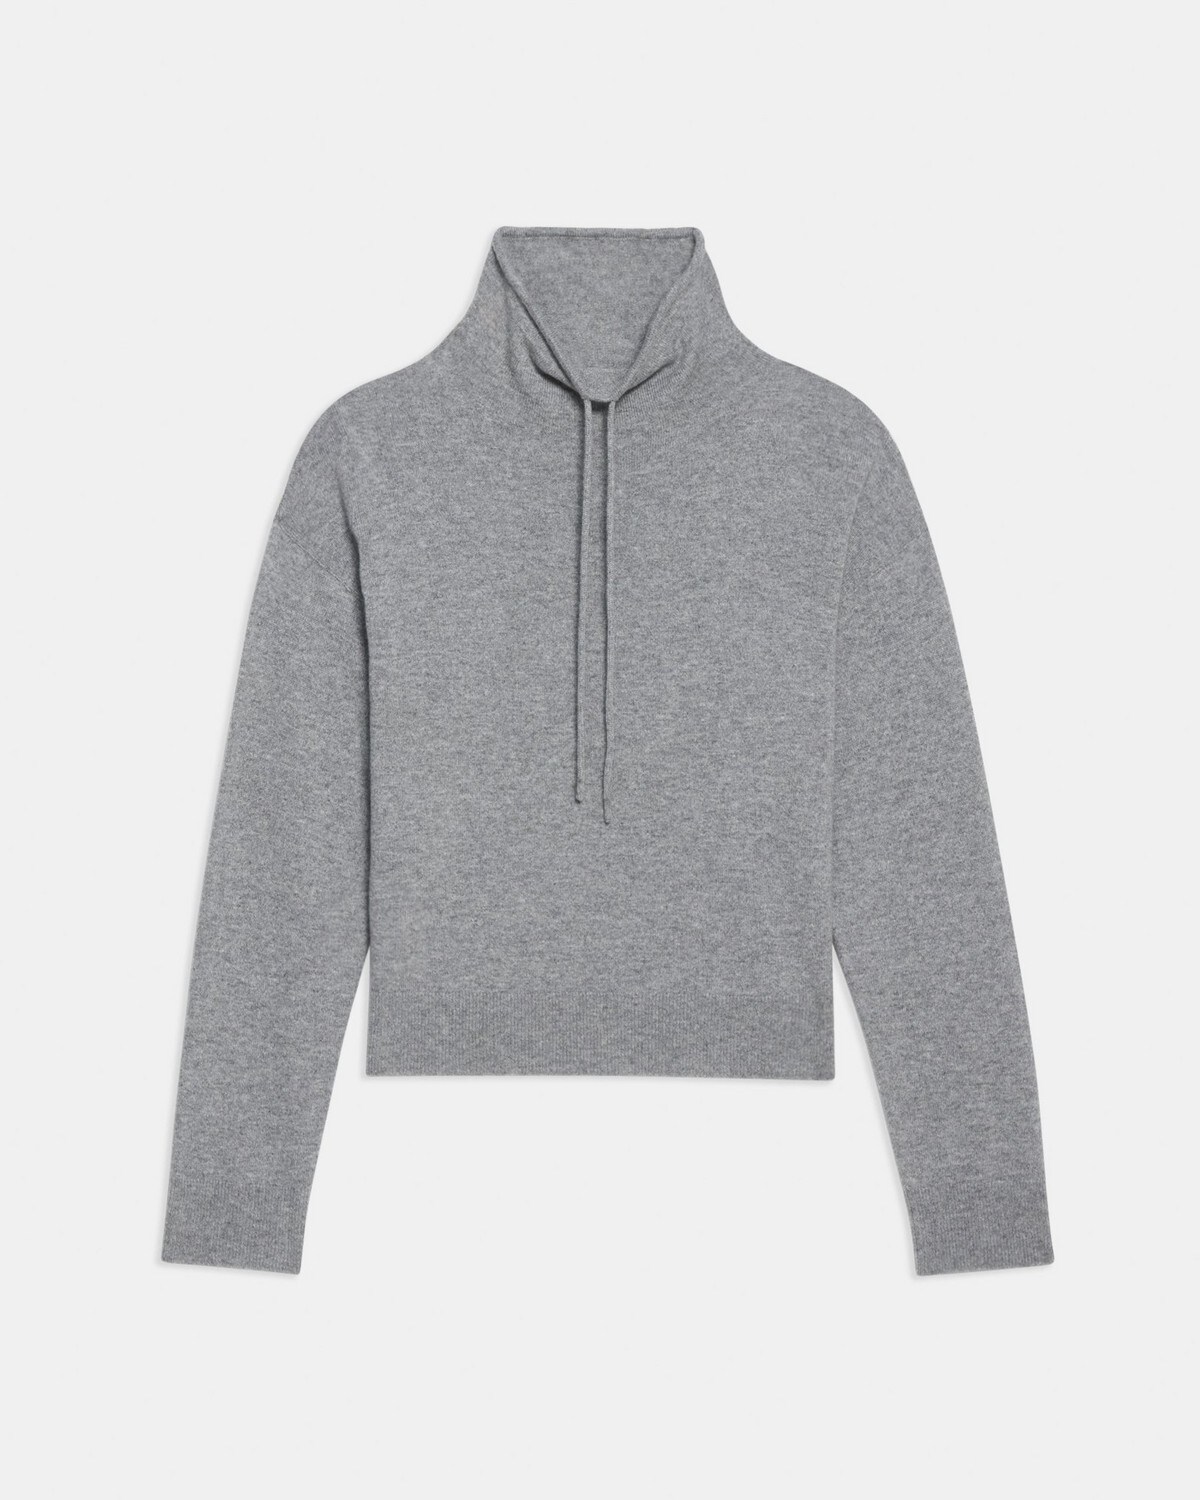 Drawstring Turtleneck Sweater in Cashmere